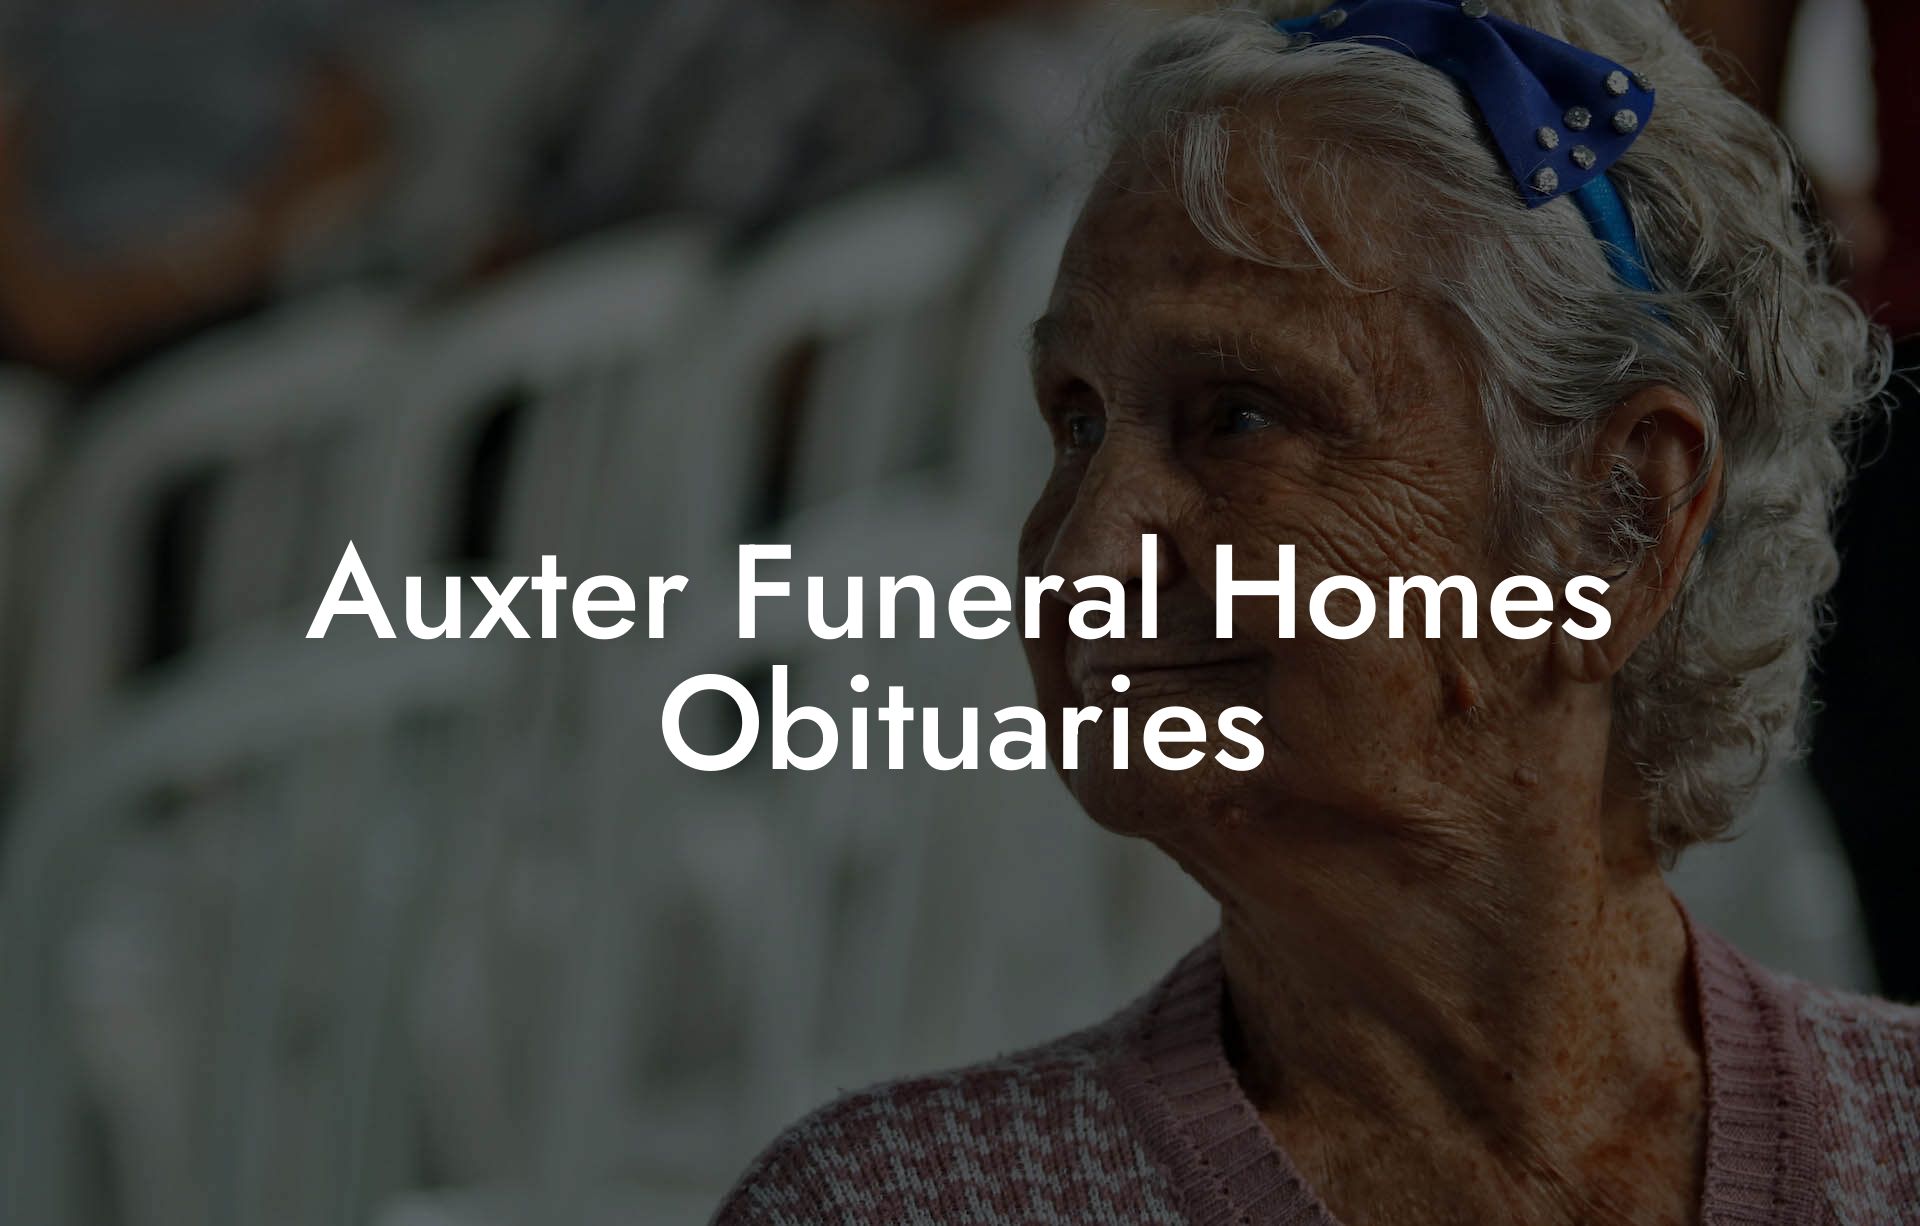 Auxter Funeral Homes Obituaries